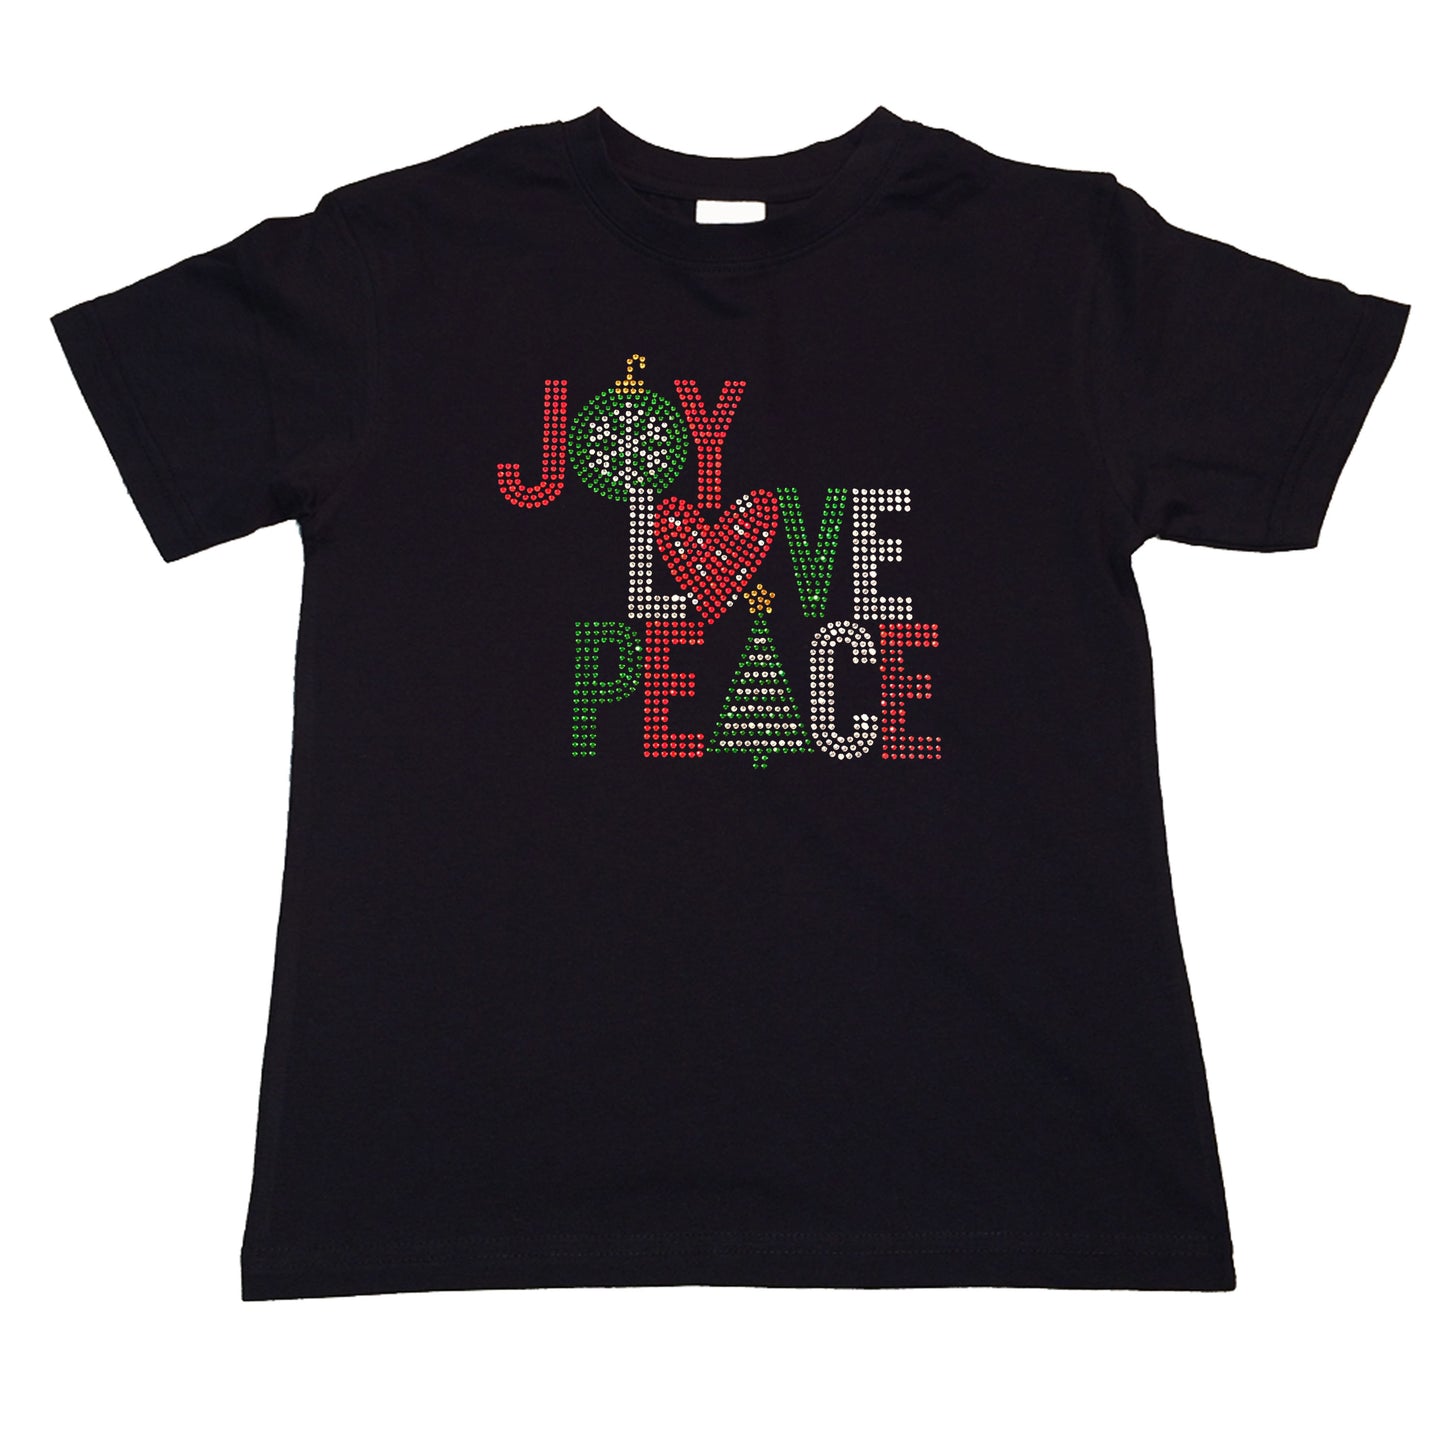 Girls Rhinestone T-Shirt " Christmas Joy Love Peace " Kids Size 3 to 14 Available